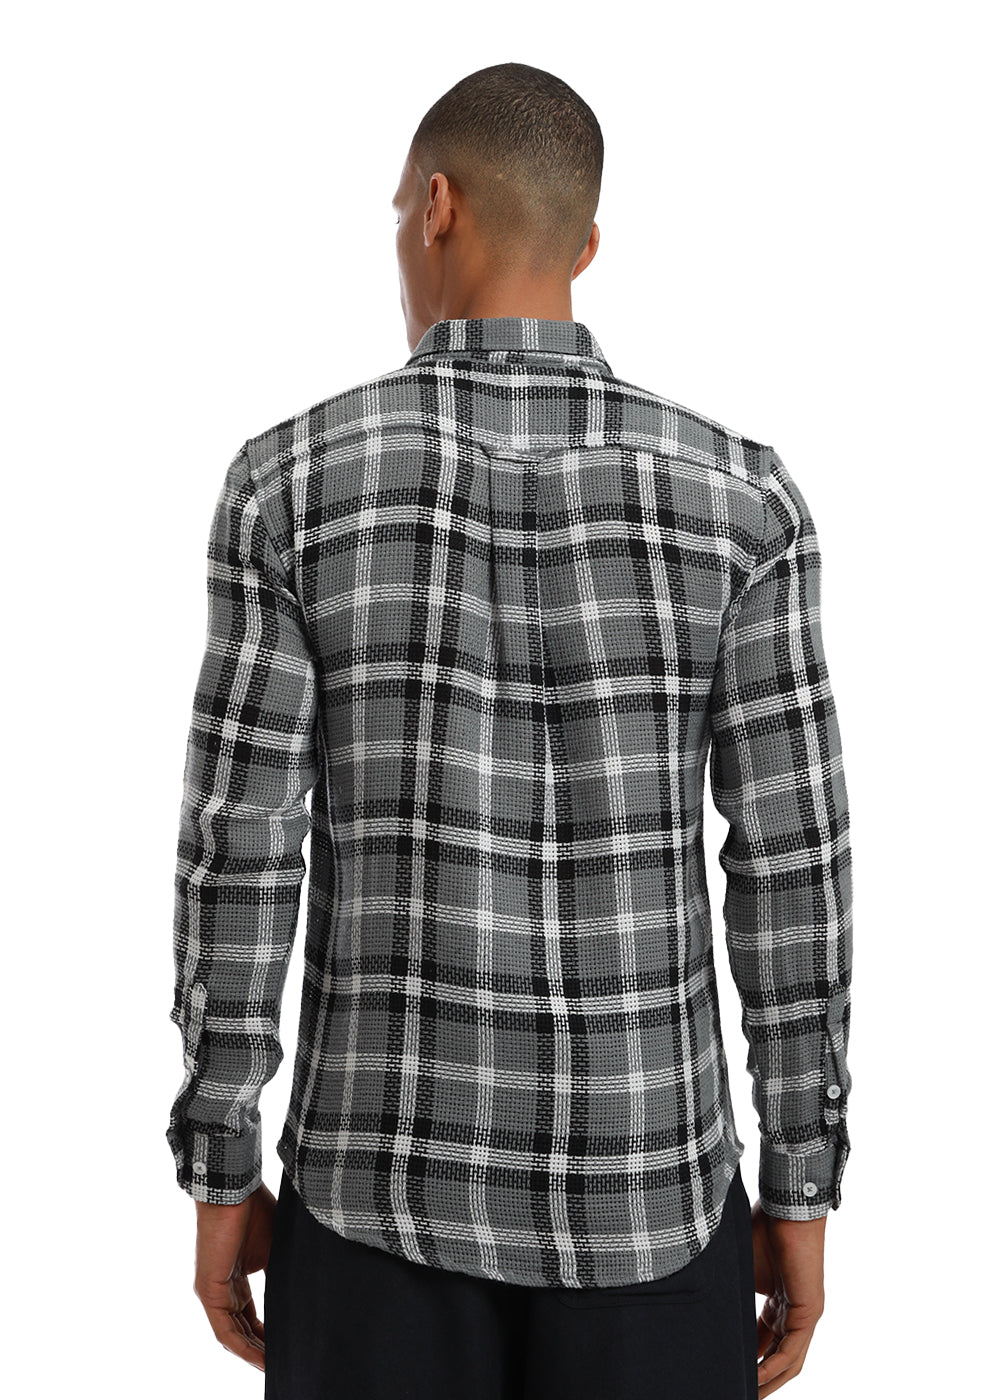 Dulet Gray Check shirt